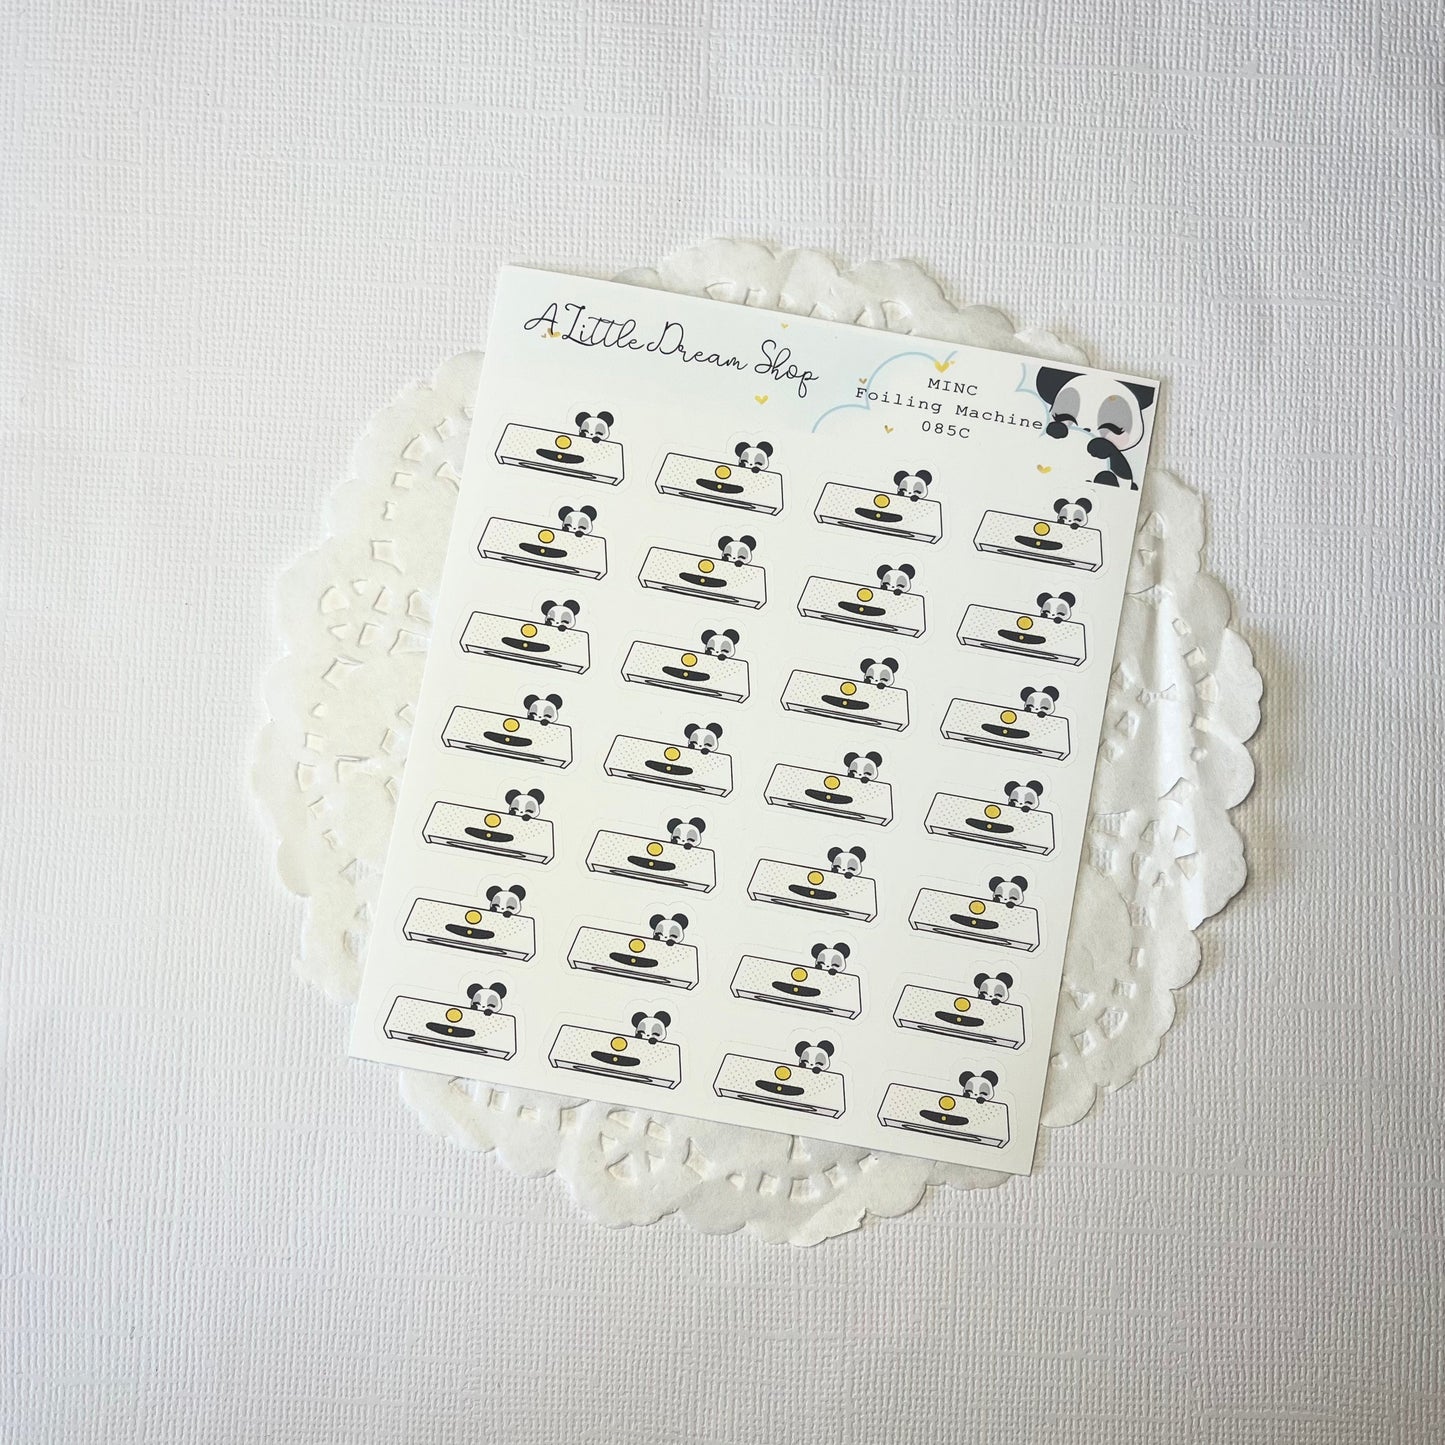 Foil Machine - Stickers Sheet